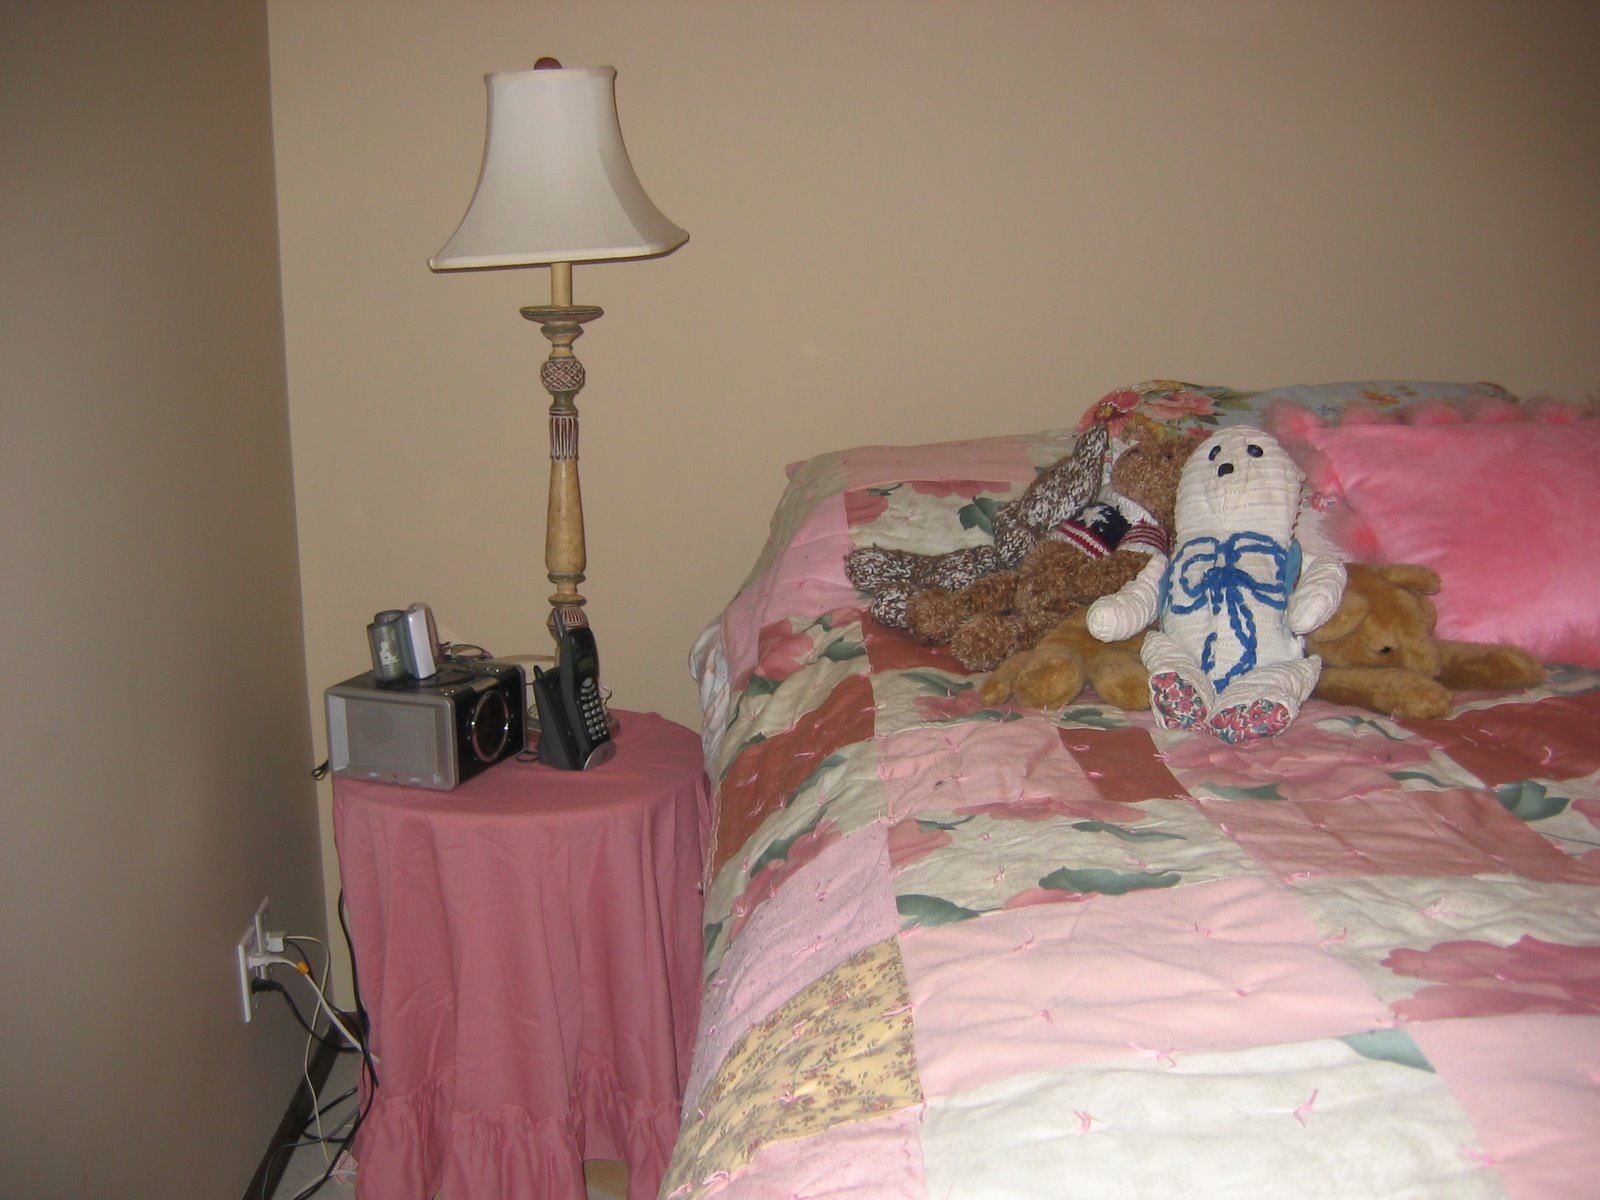 [My+new+bed+July+11,+2008+#2.JPG]